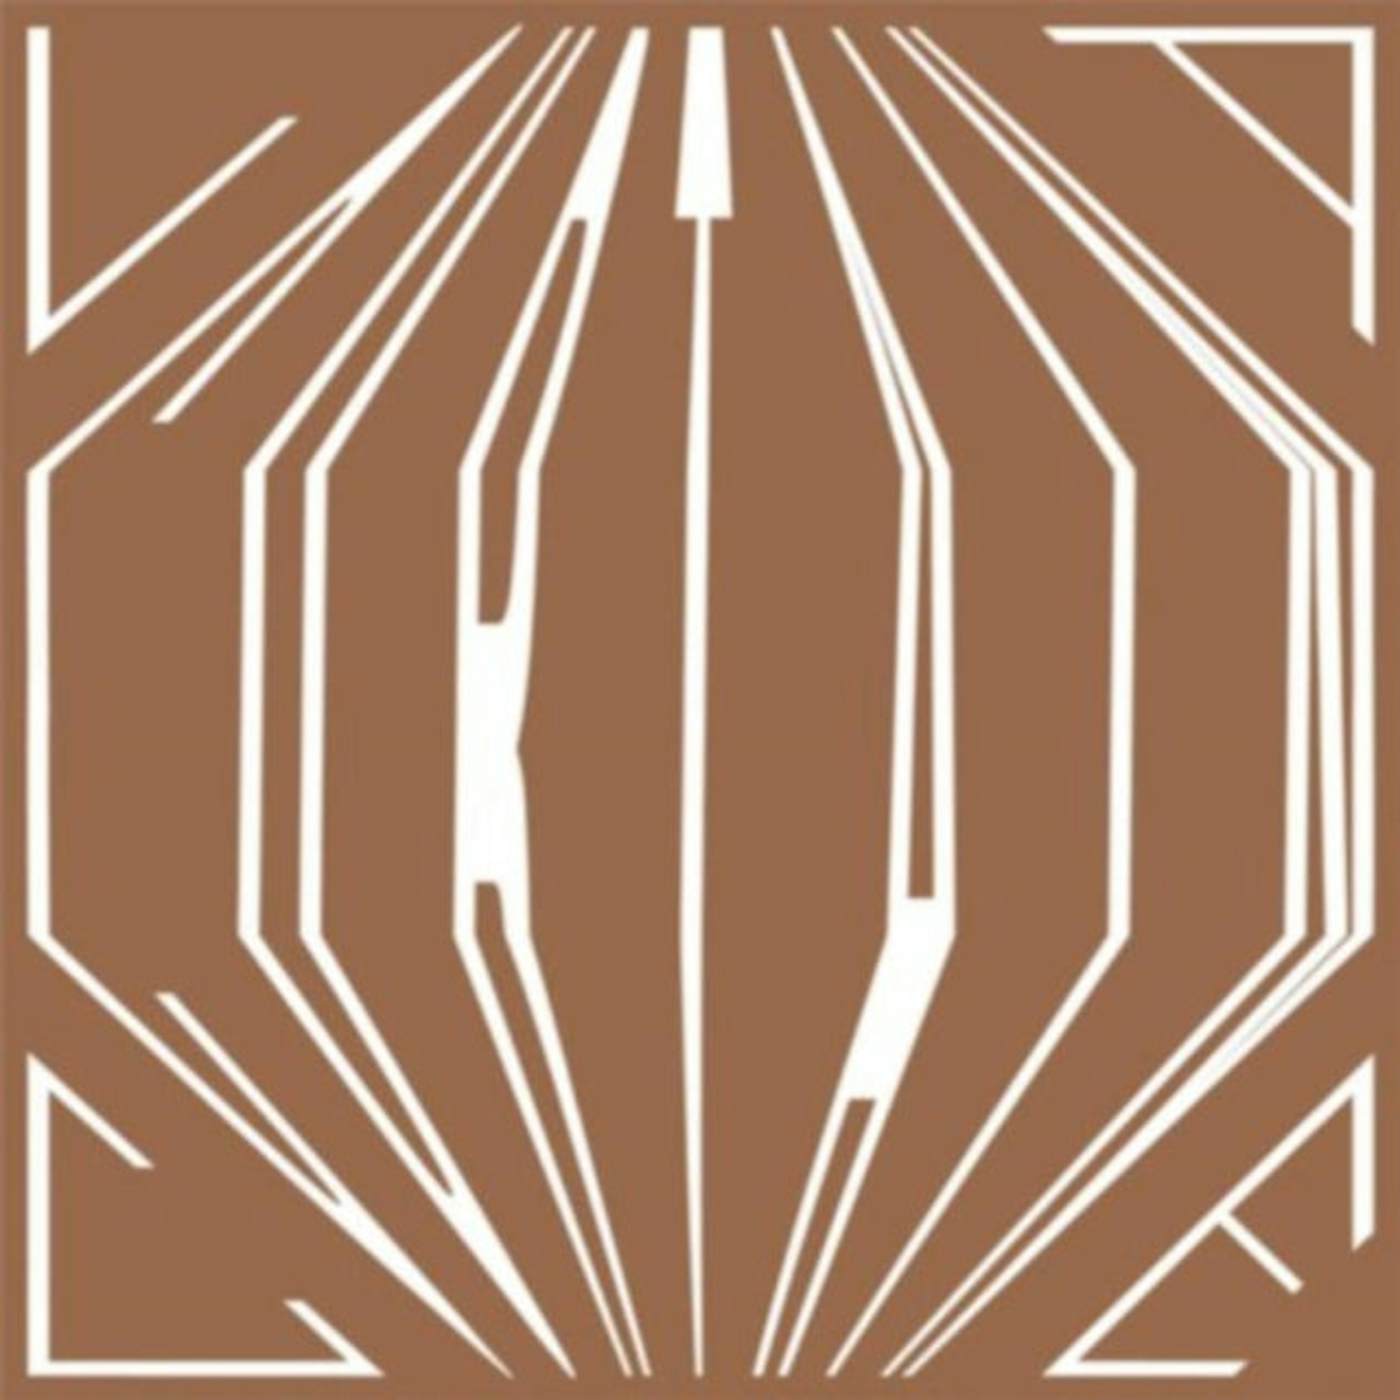 Lace Curtain LP - Fallingrunning Ep (Vinyl)